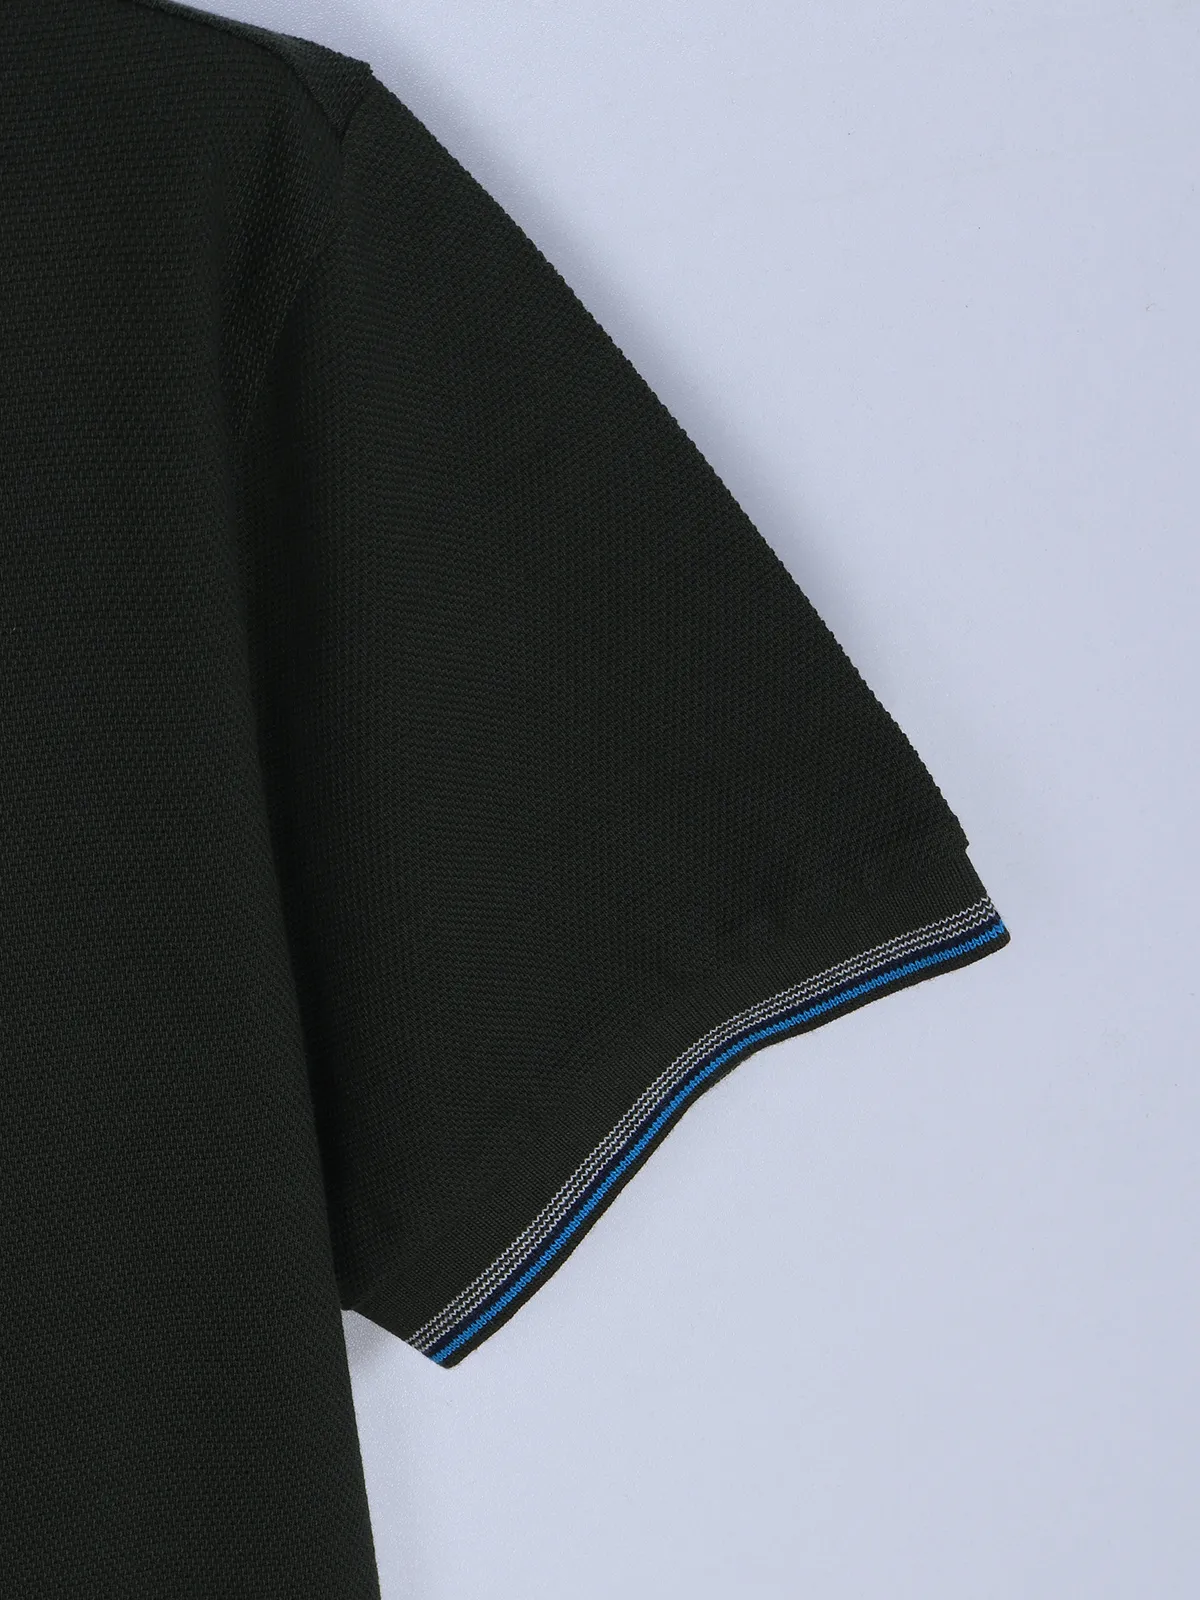 UCB military green cotton plain t shirt